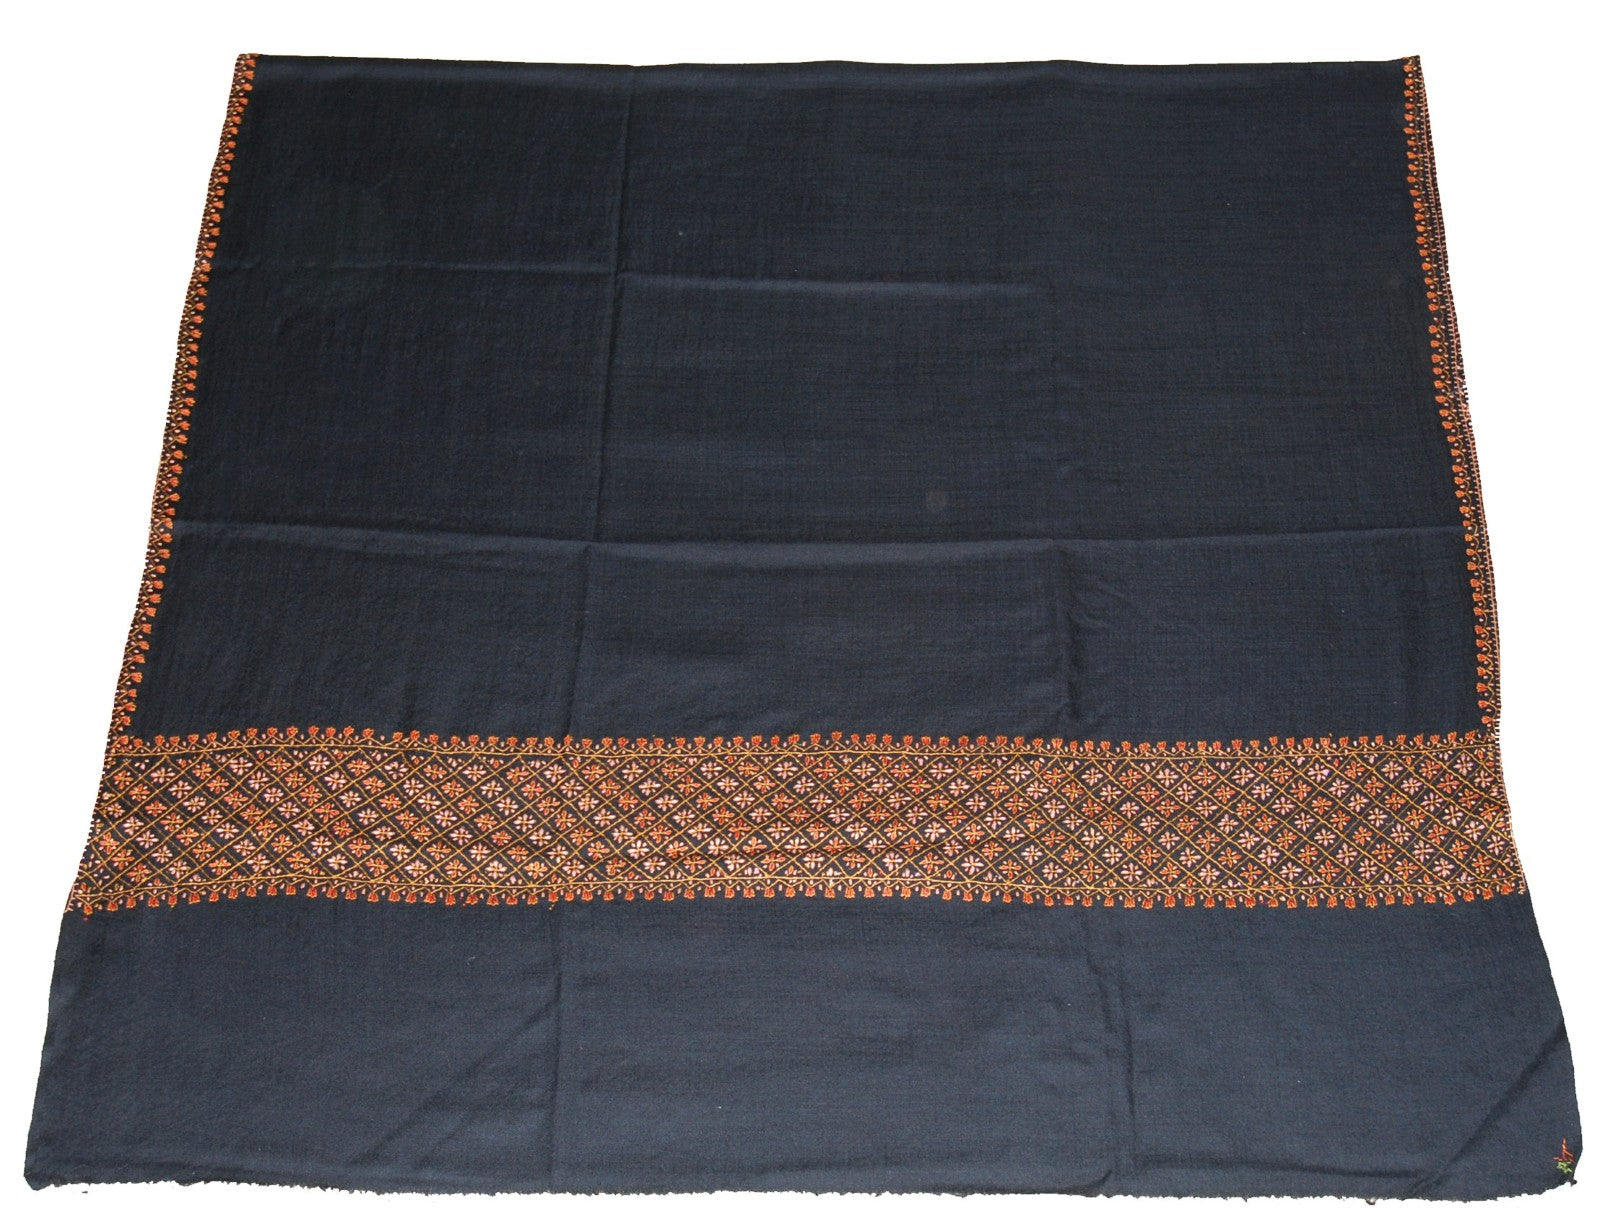 Embroidered Wool Shawl Black, Multicolor "Sozni" Embroidery #WS-501